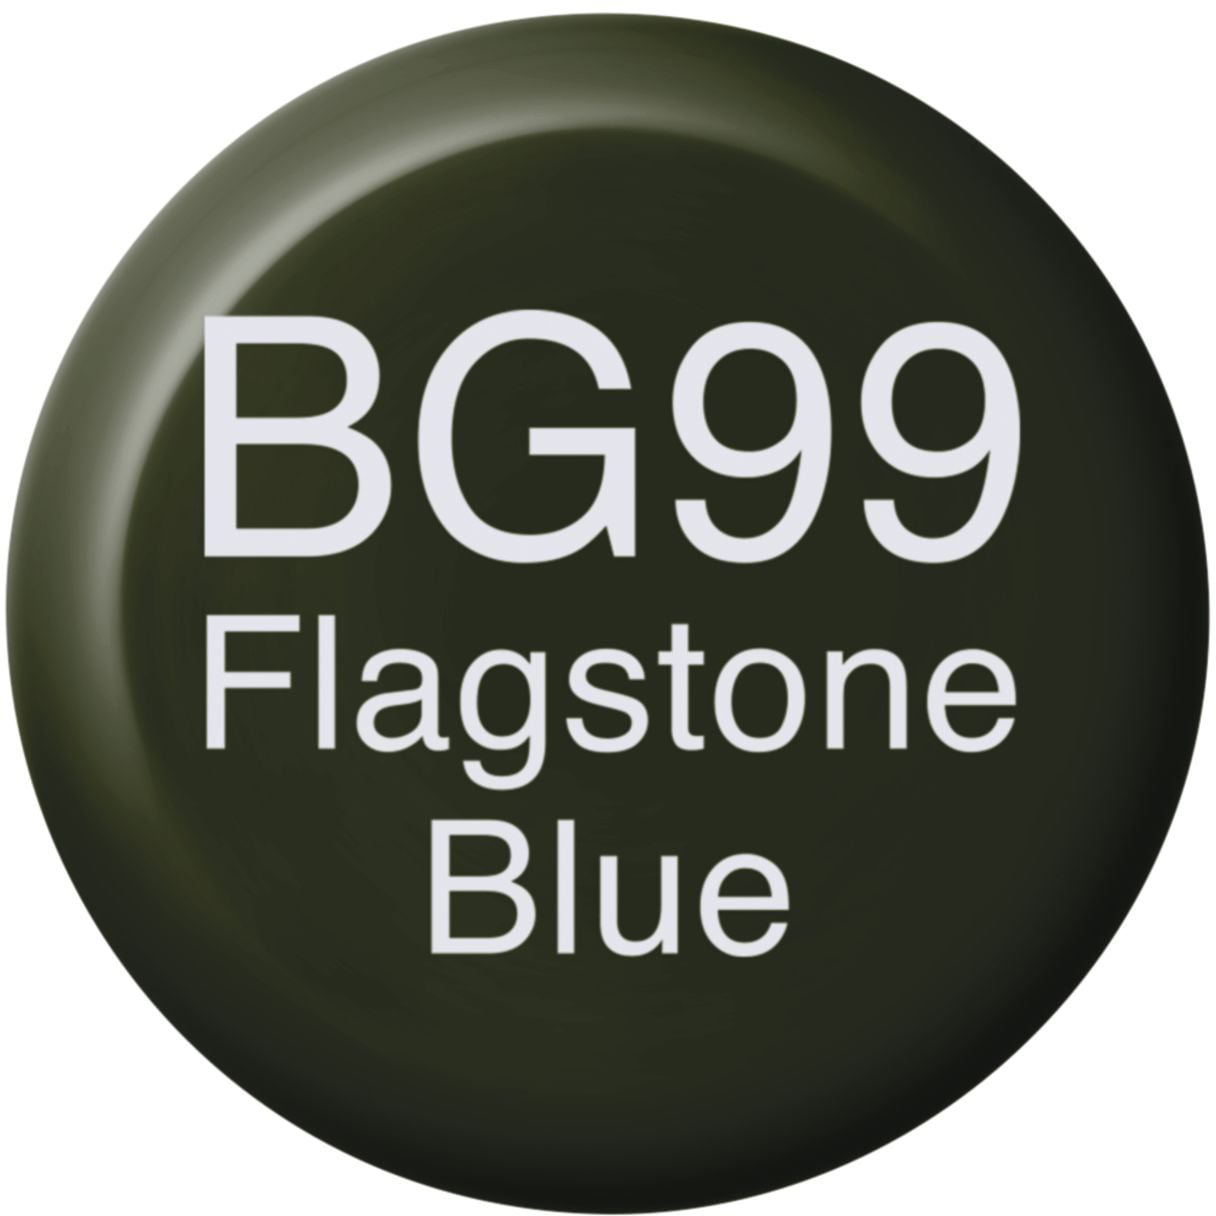 COPIC Ink Refill 21076130 BG99 - Flagstone Blue BG99 - Flagstone Blue